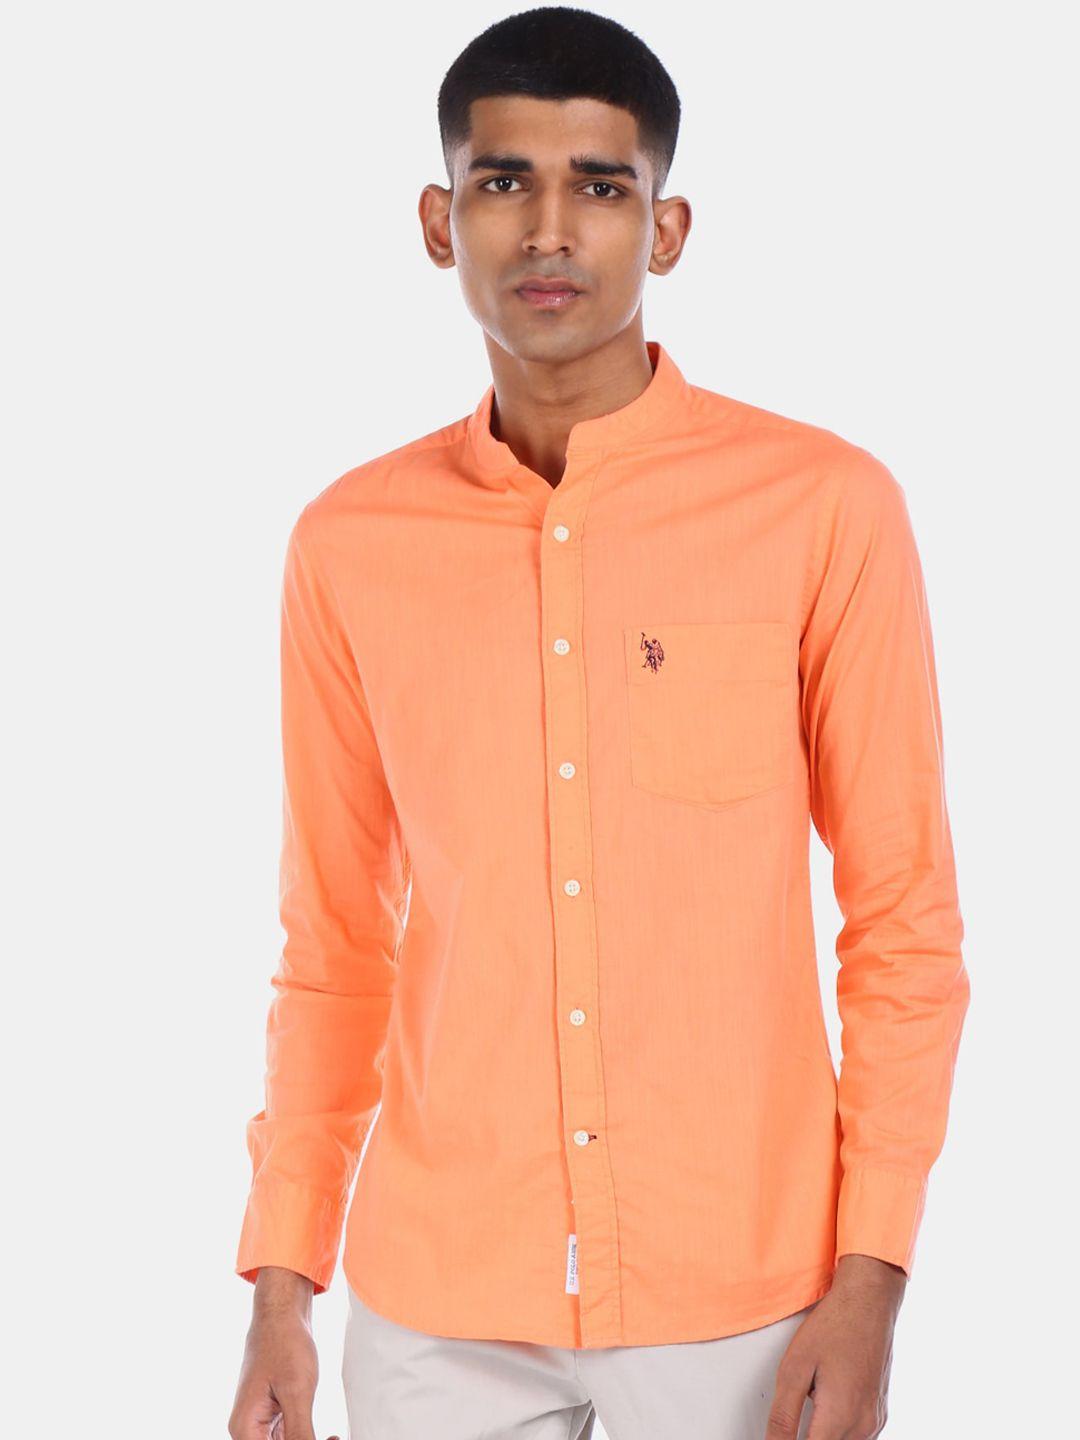 u.s. polo assn. men coral orange regular fit solid cotton casual shirt